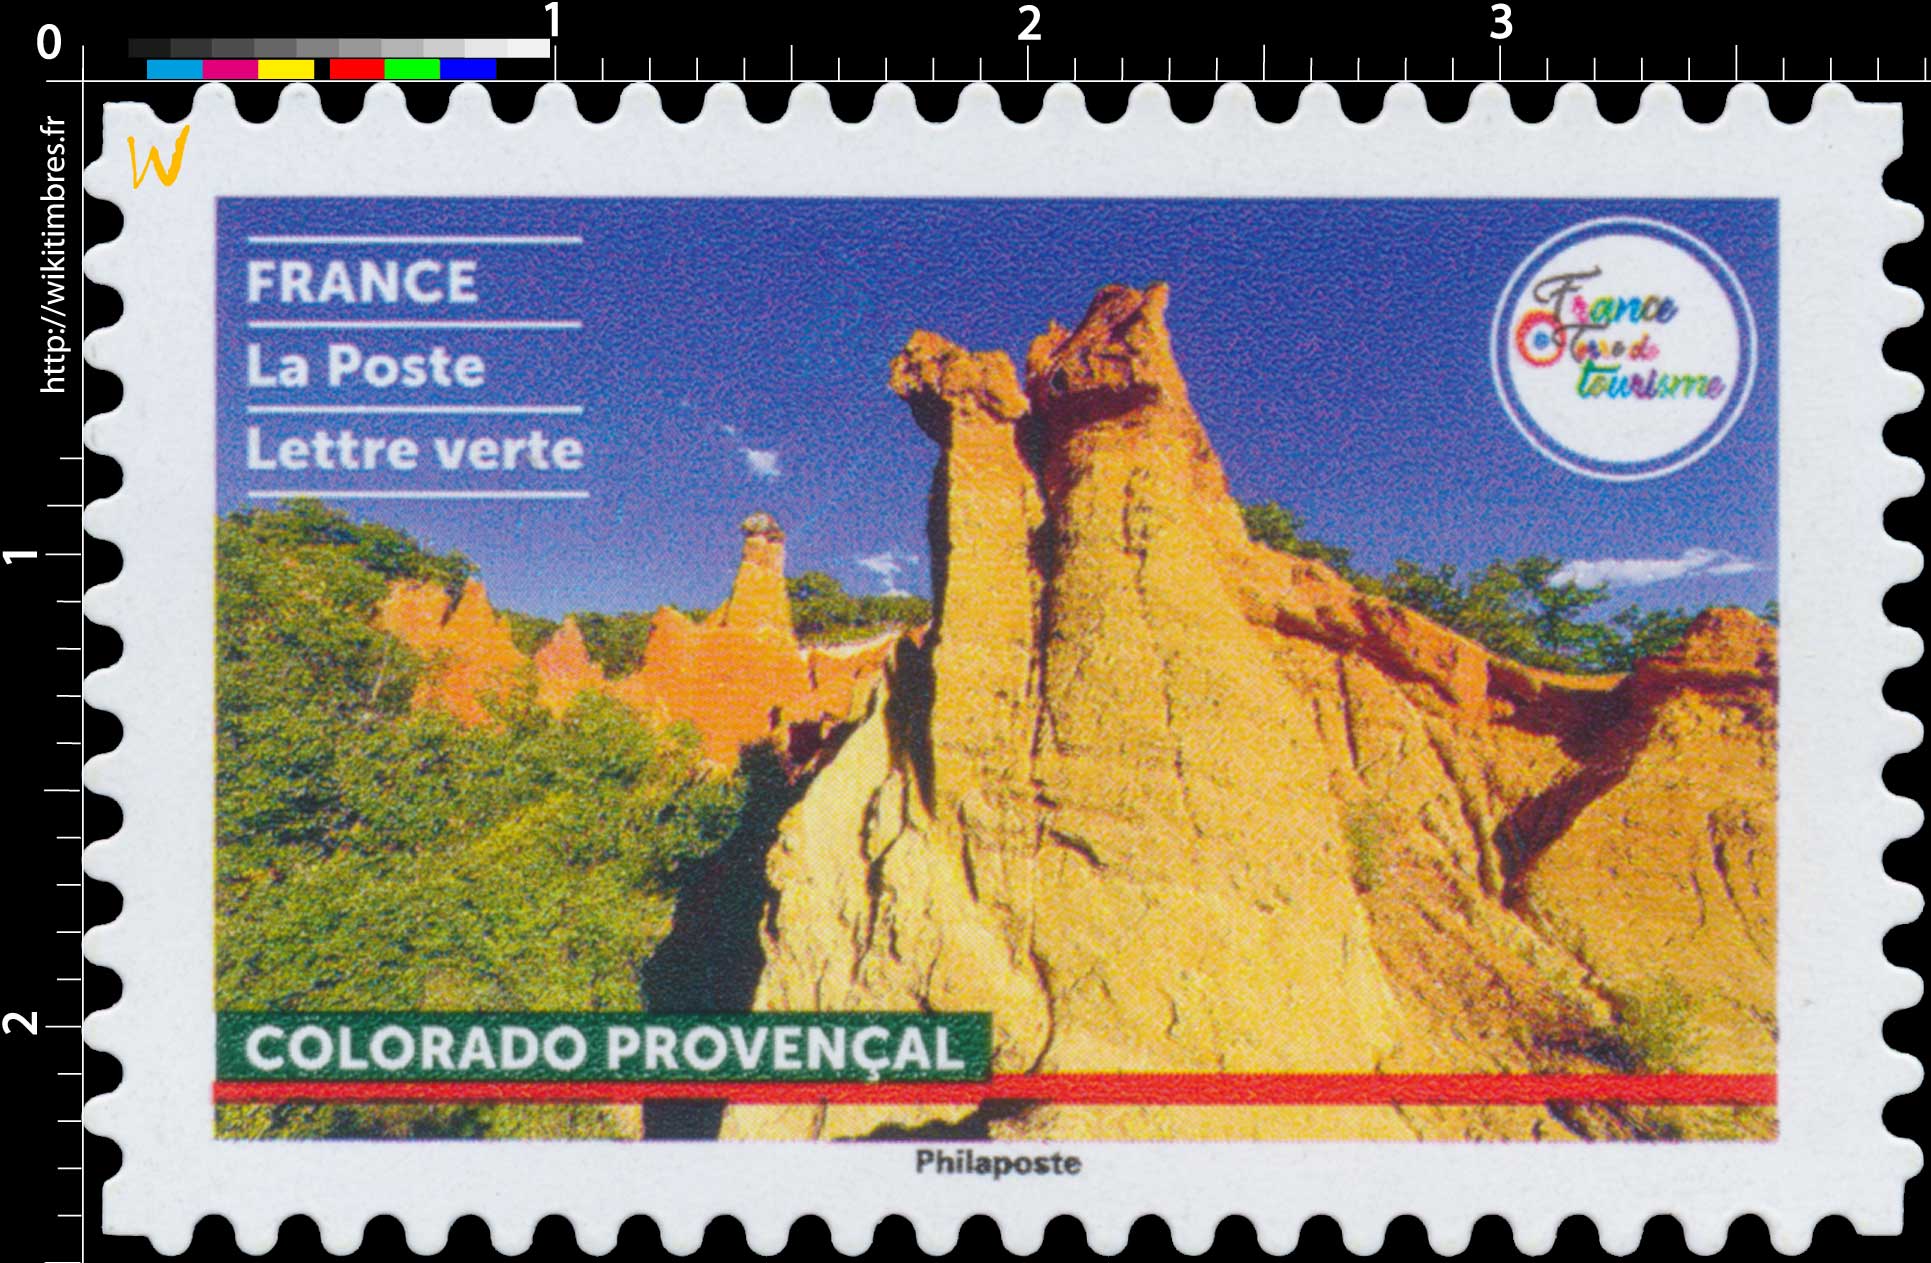 2021 France - Terre de tourisme - Colorado Provençal